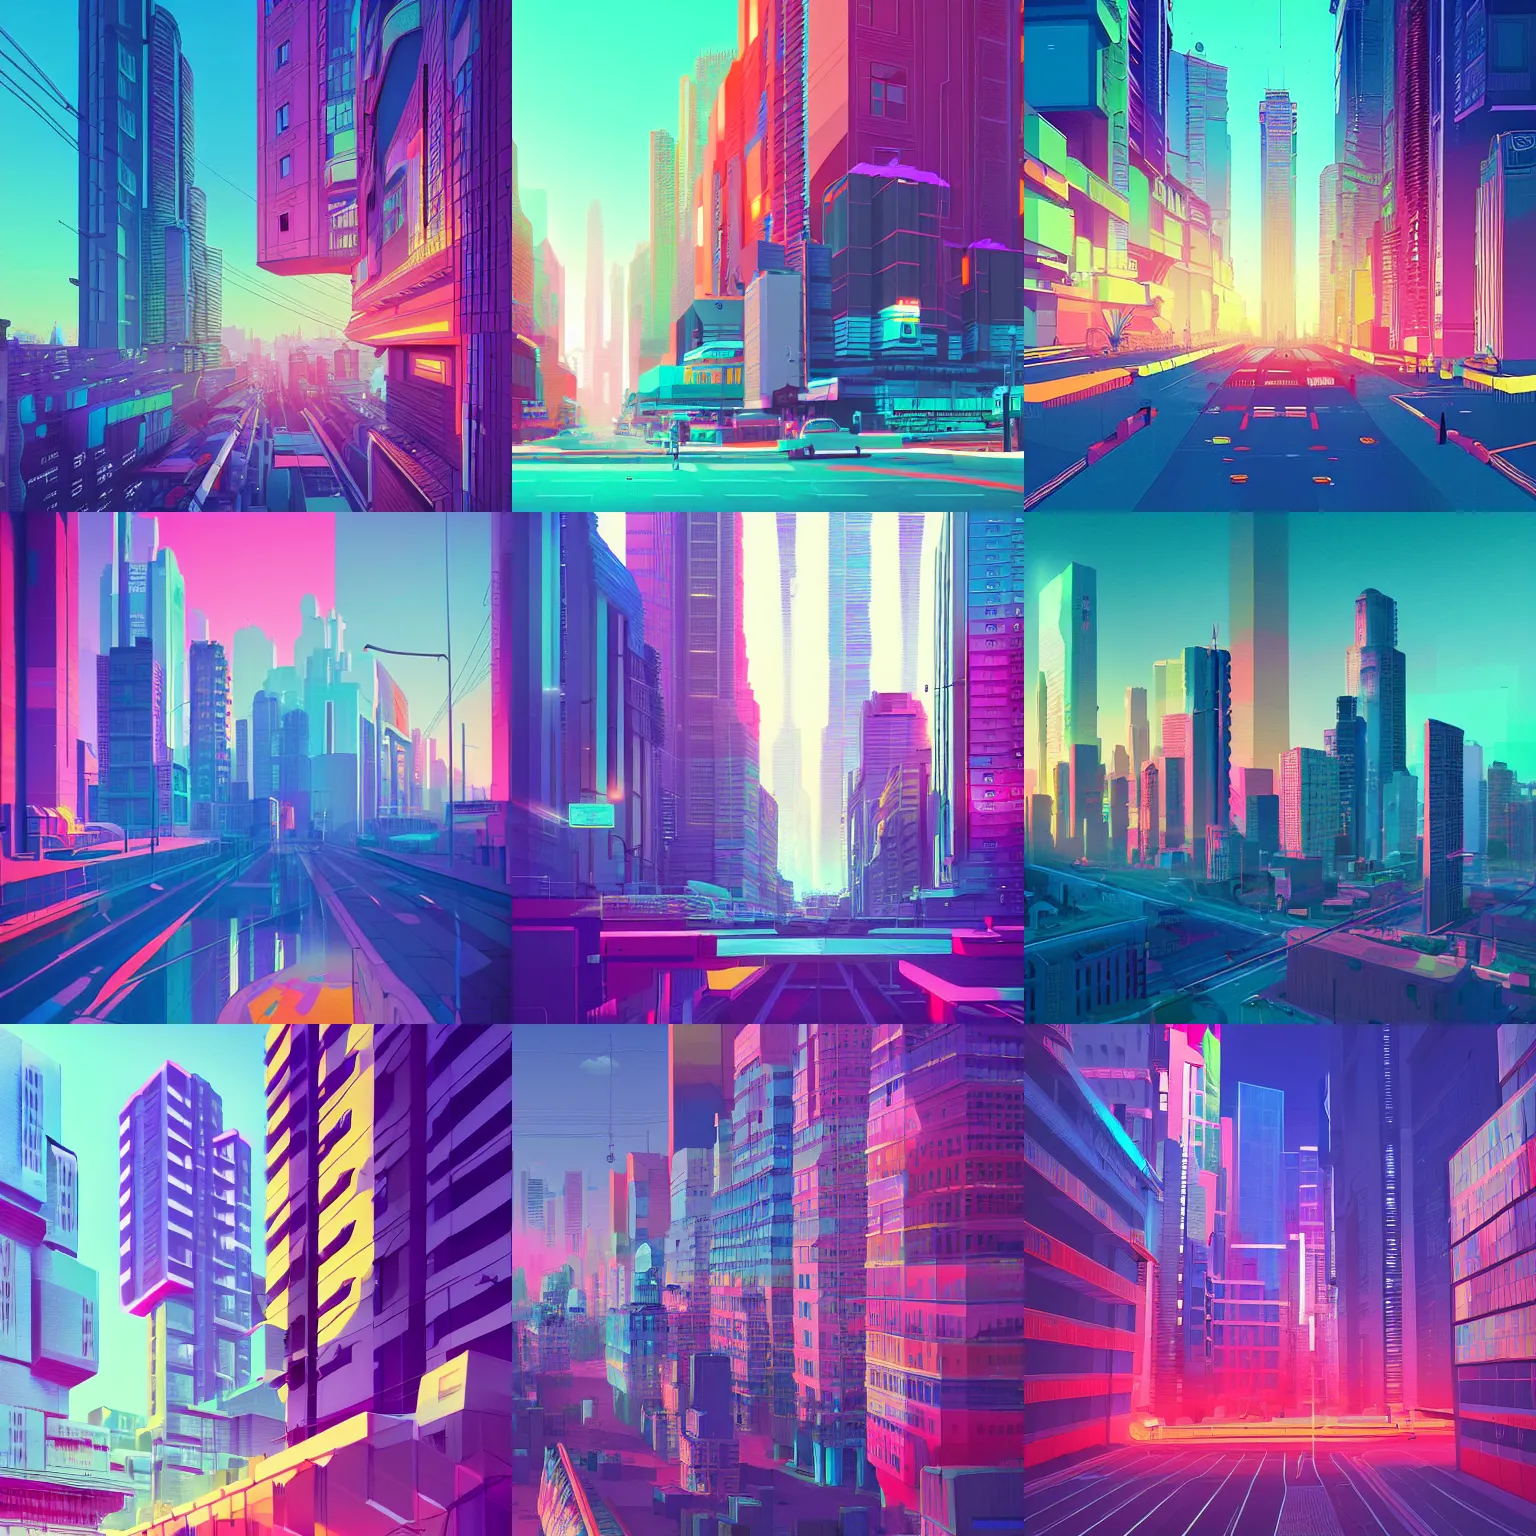 Prompt: digital illustration of cityscape, vibrant color scheme, by beeple and makoto shinkai